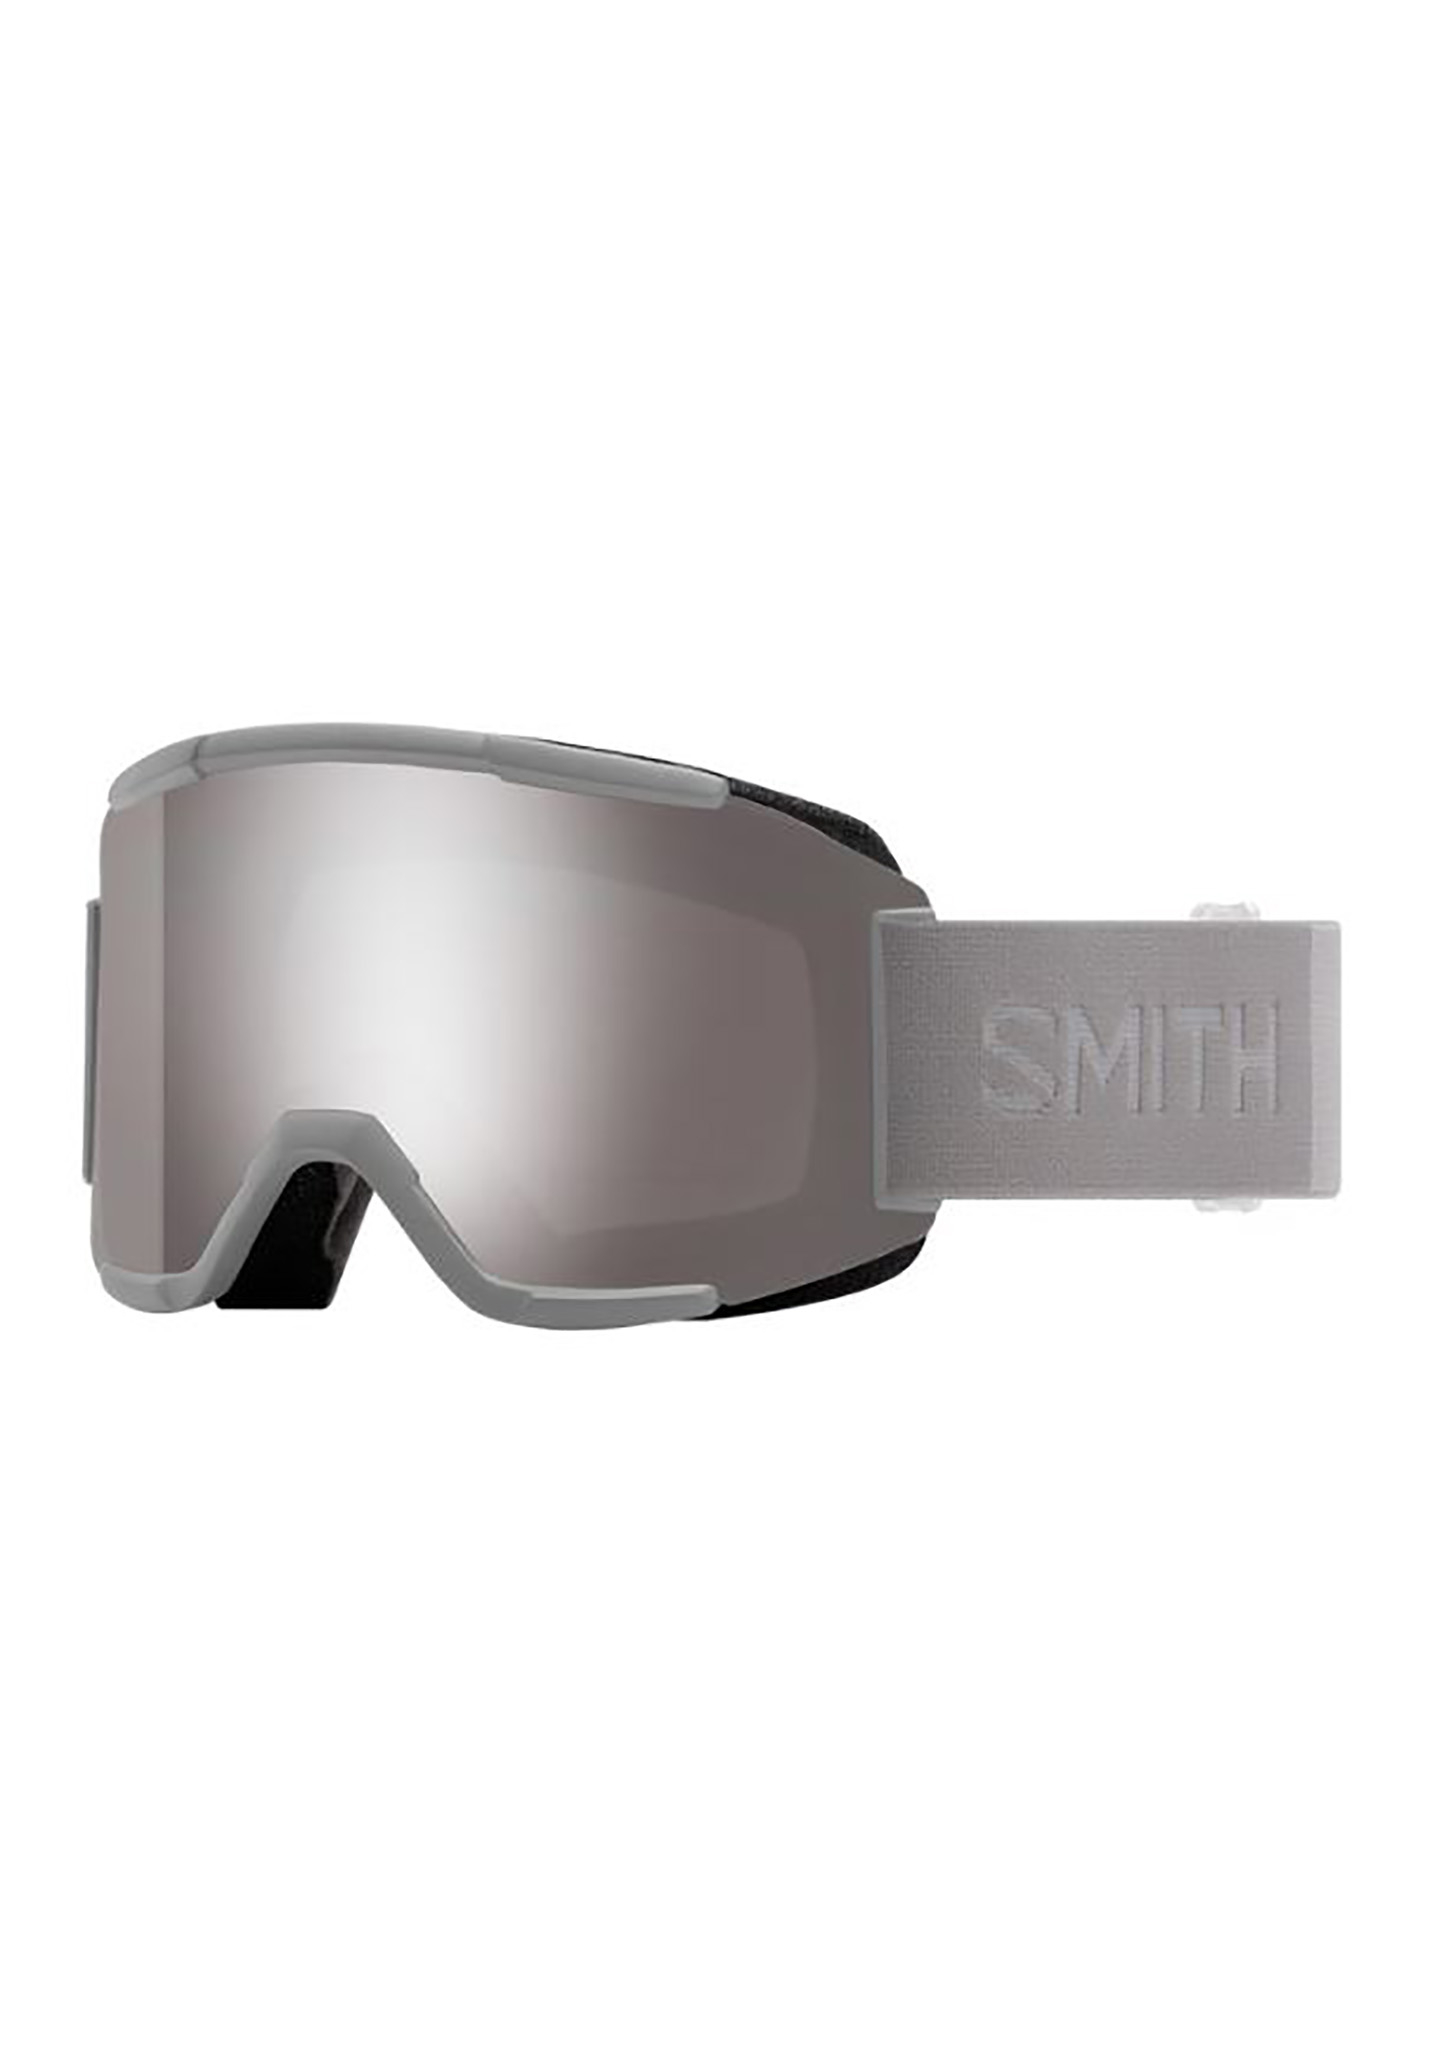 Smith Squad Snowboardbrillen silber One Size